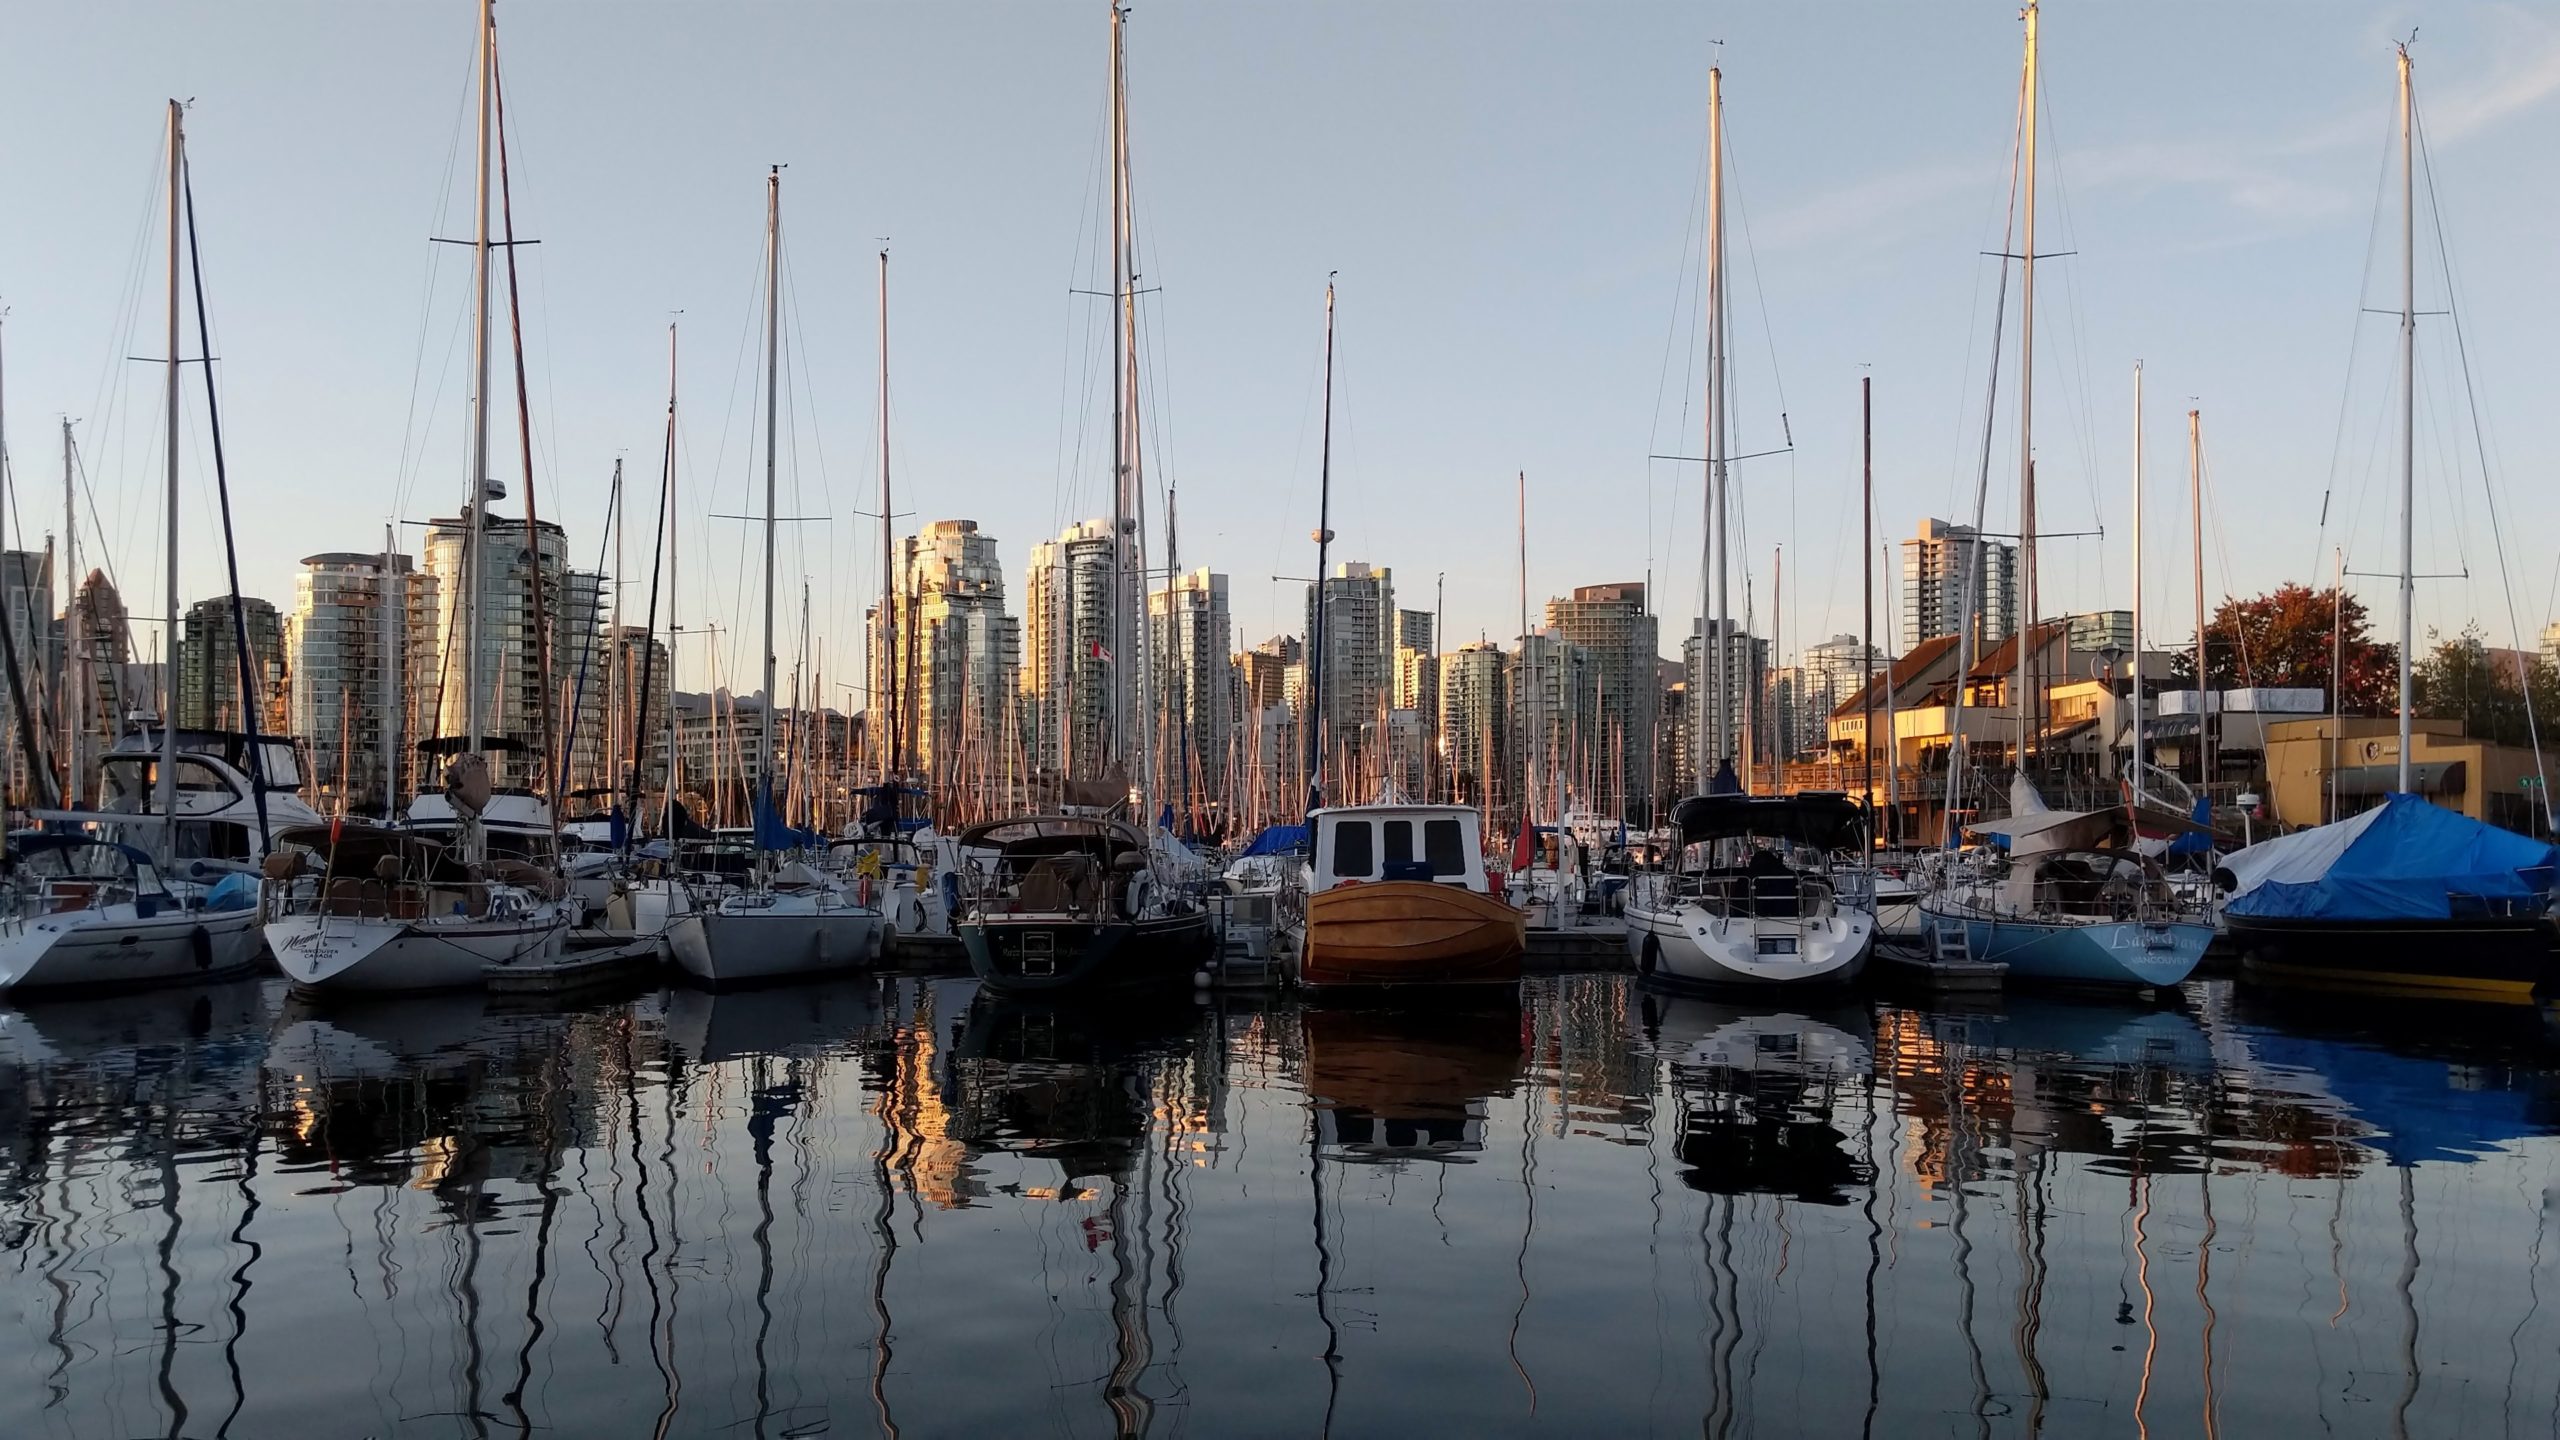 Marina boats in the sunset